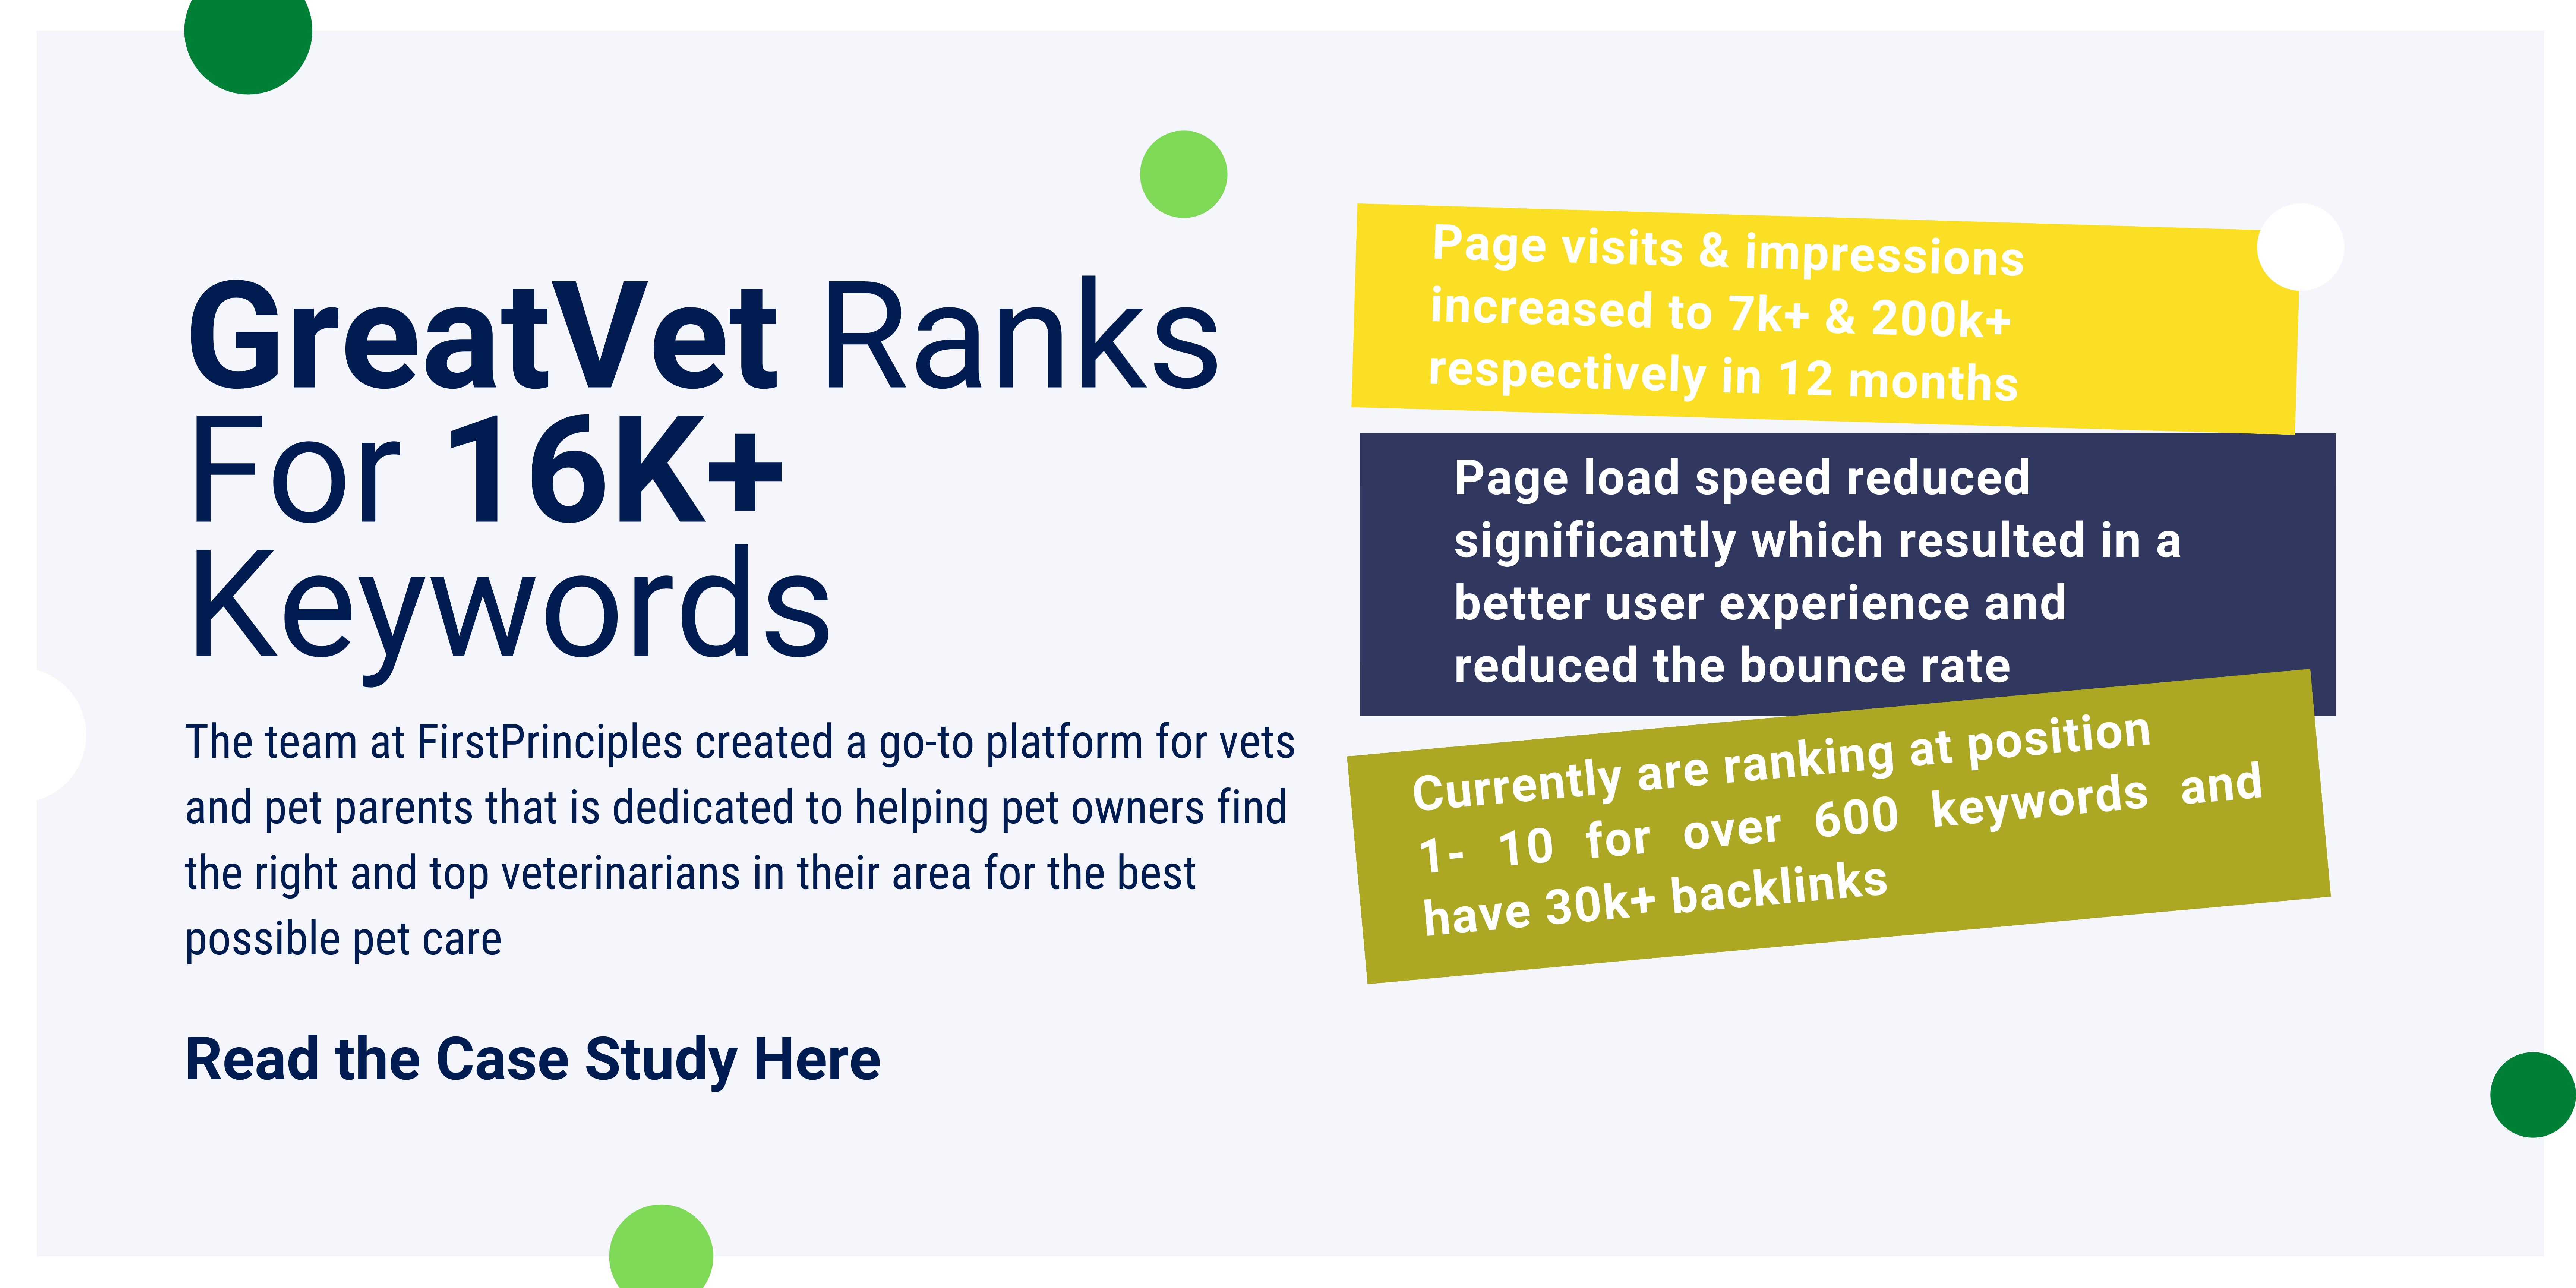 Greatvet ranks for 16k+ keywords - featured Image